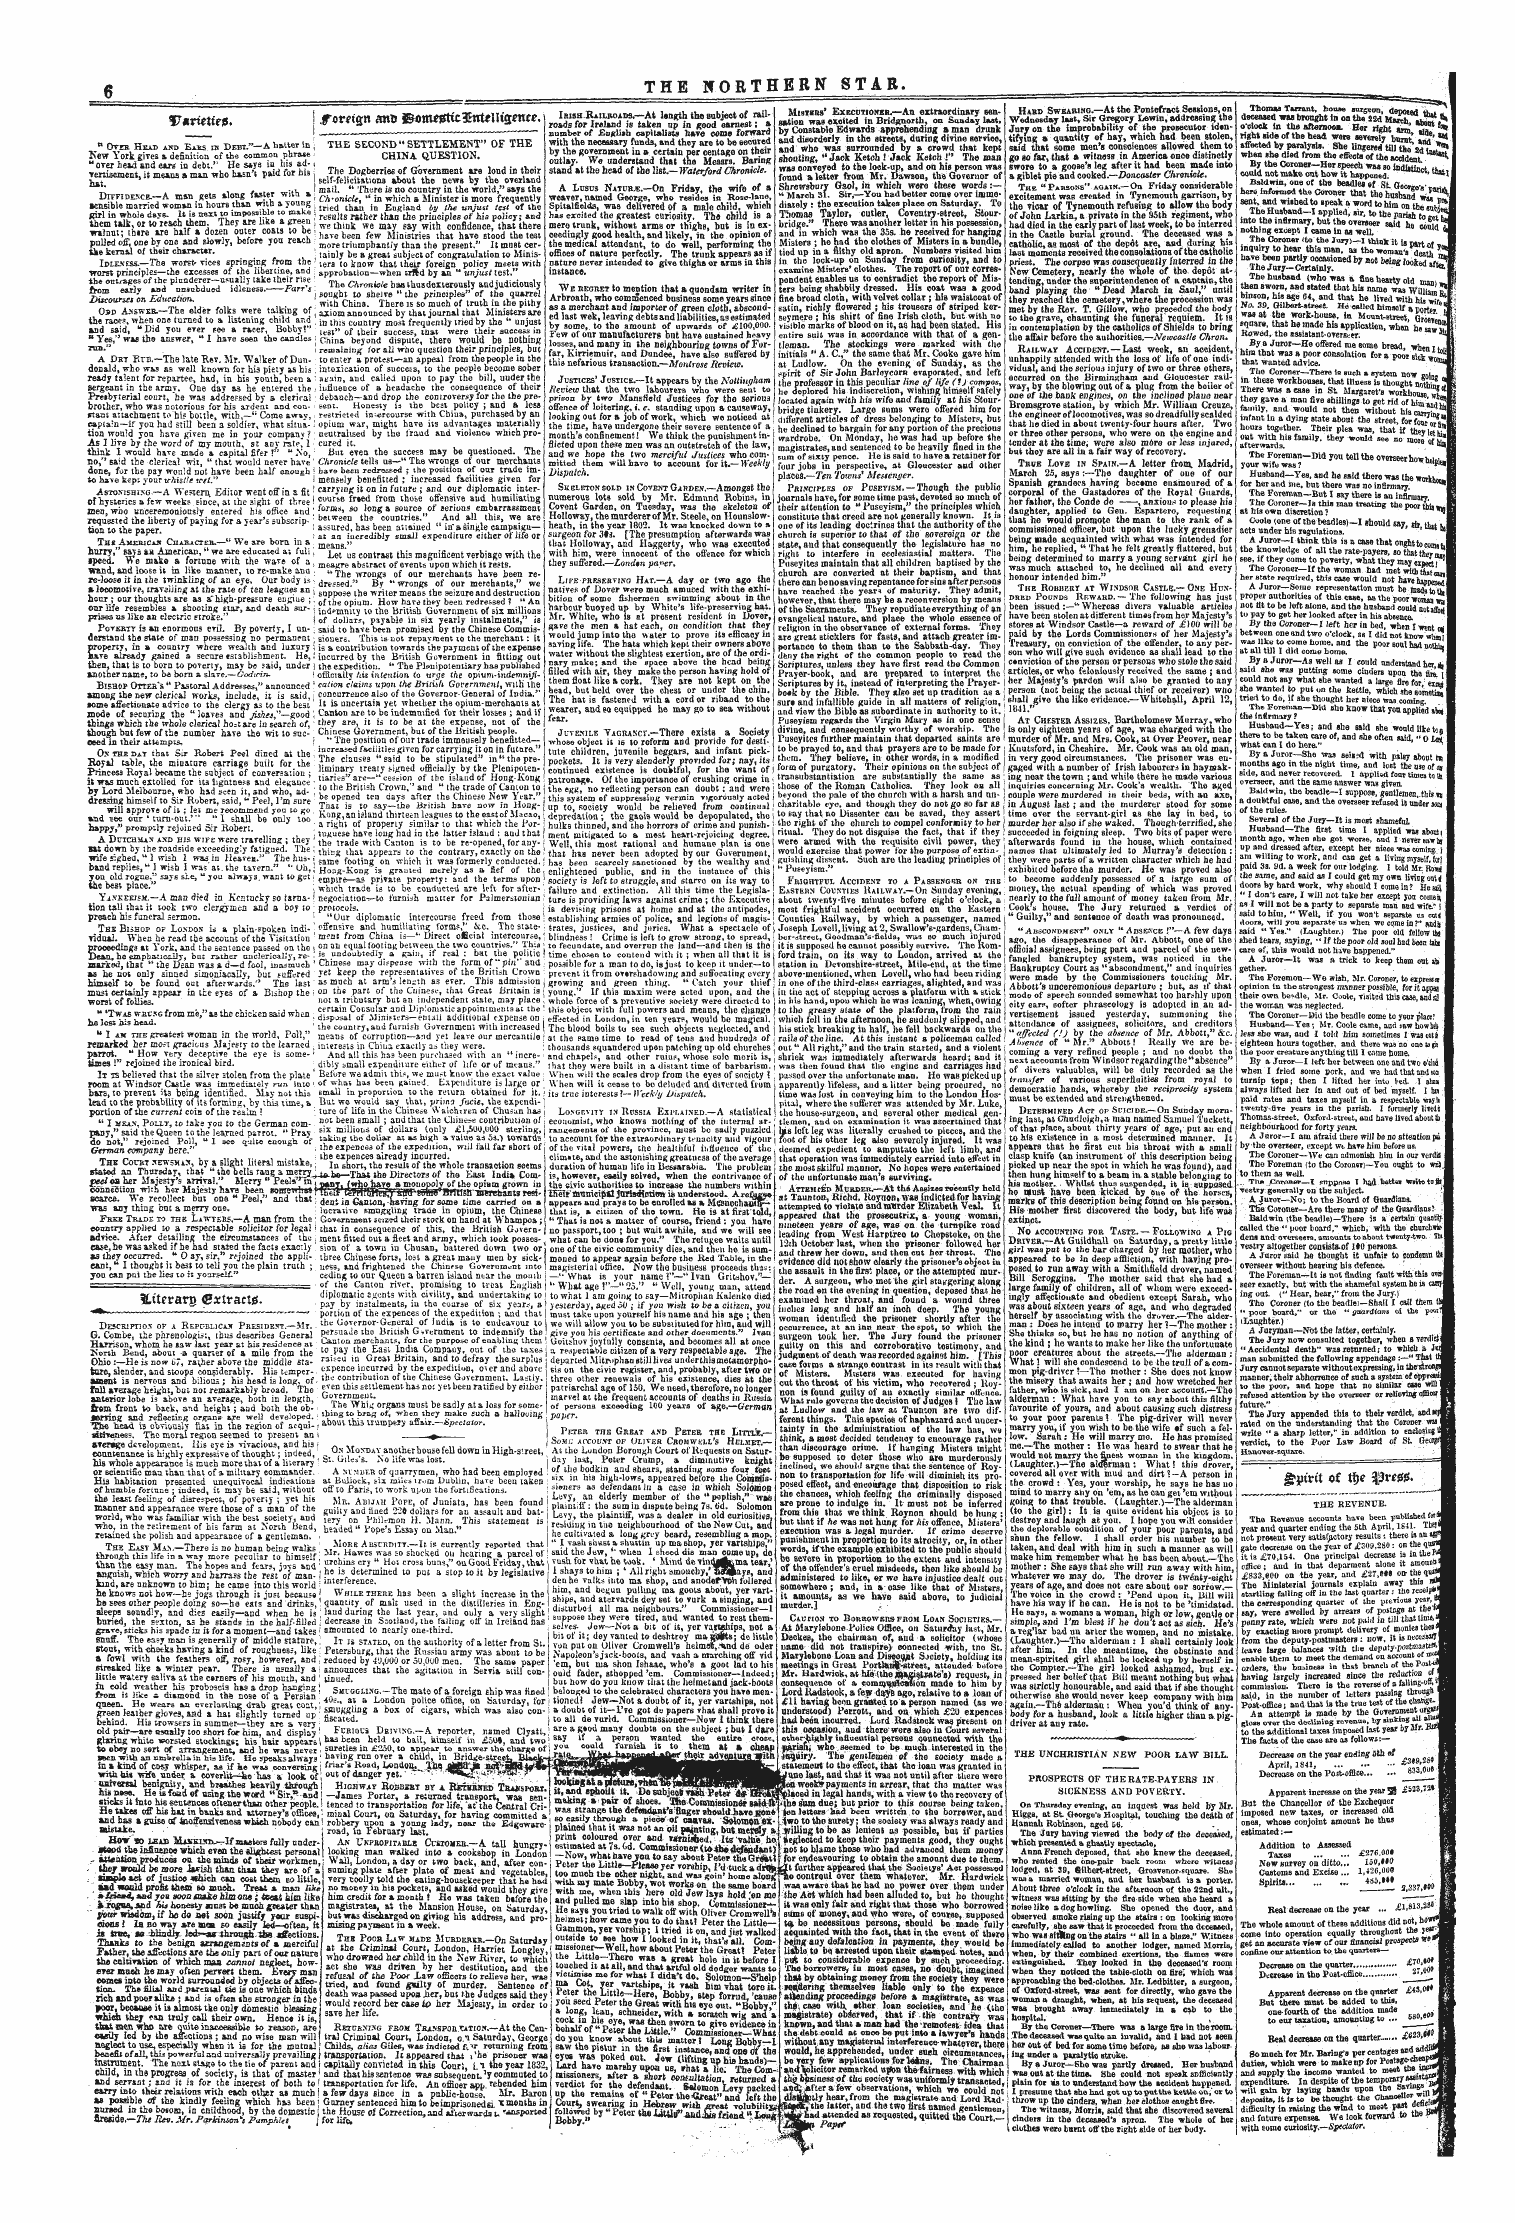 Northern Star (1837-1852): jS F Y, 1st edition - Sfoveiqn Mtu &Ome$Tit '$Nte\\Iqietice.